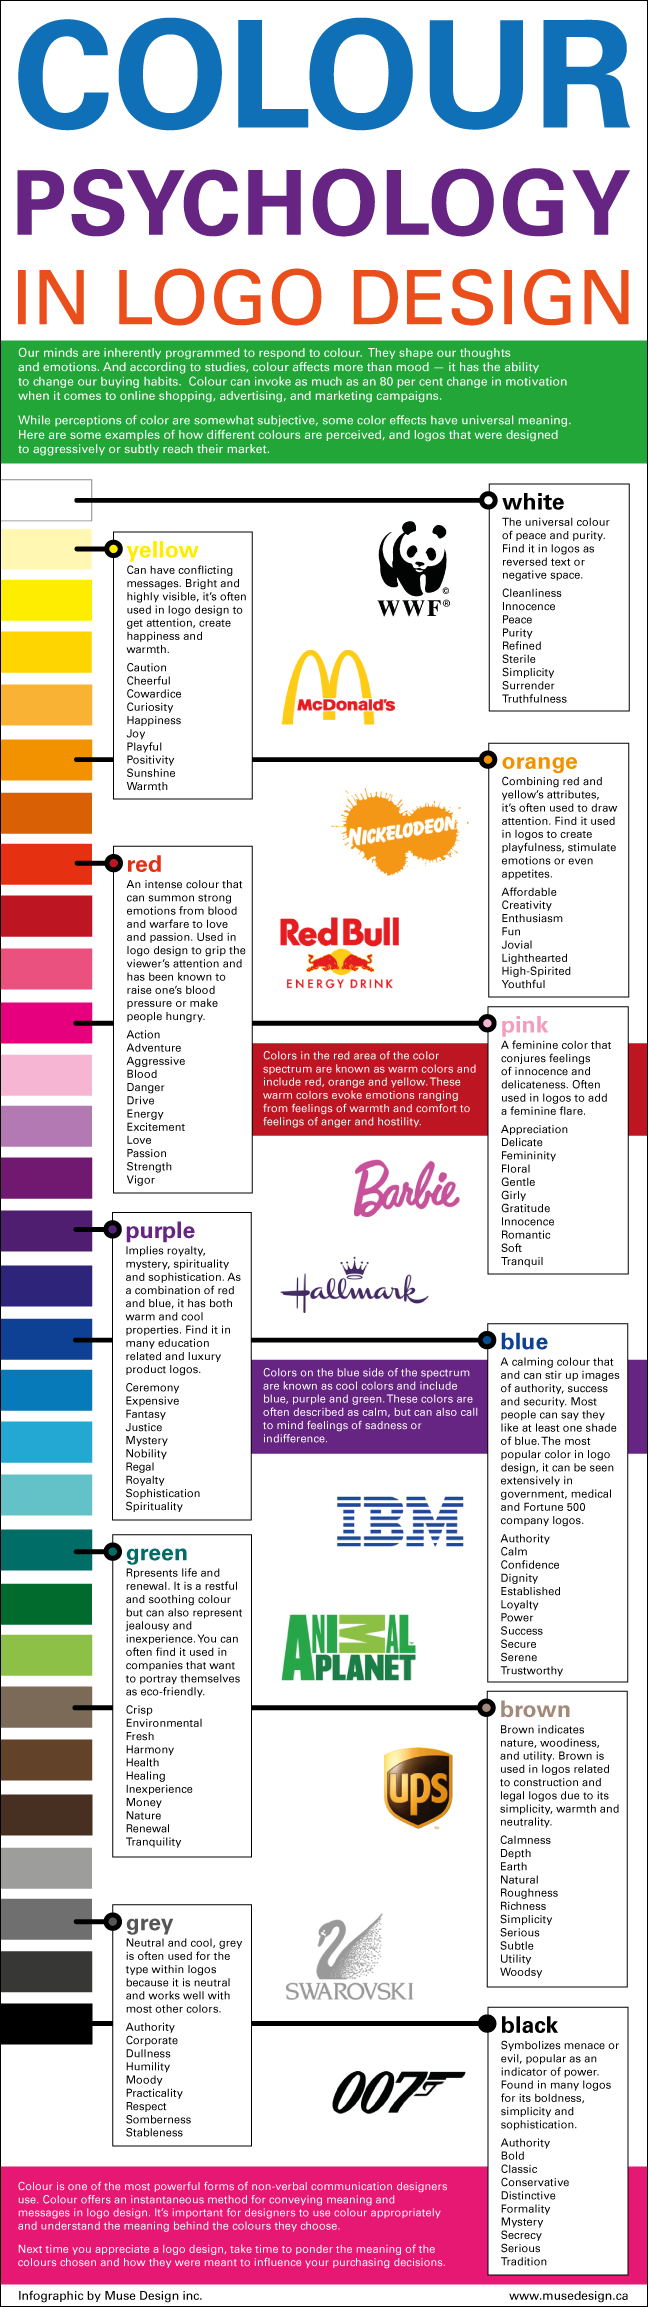 Purple Logos: Why Do Some Successful Companies Use Purple? -   Blog